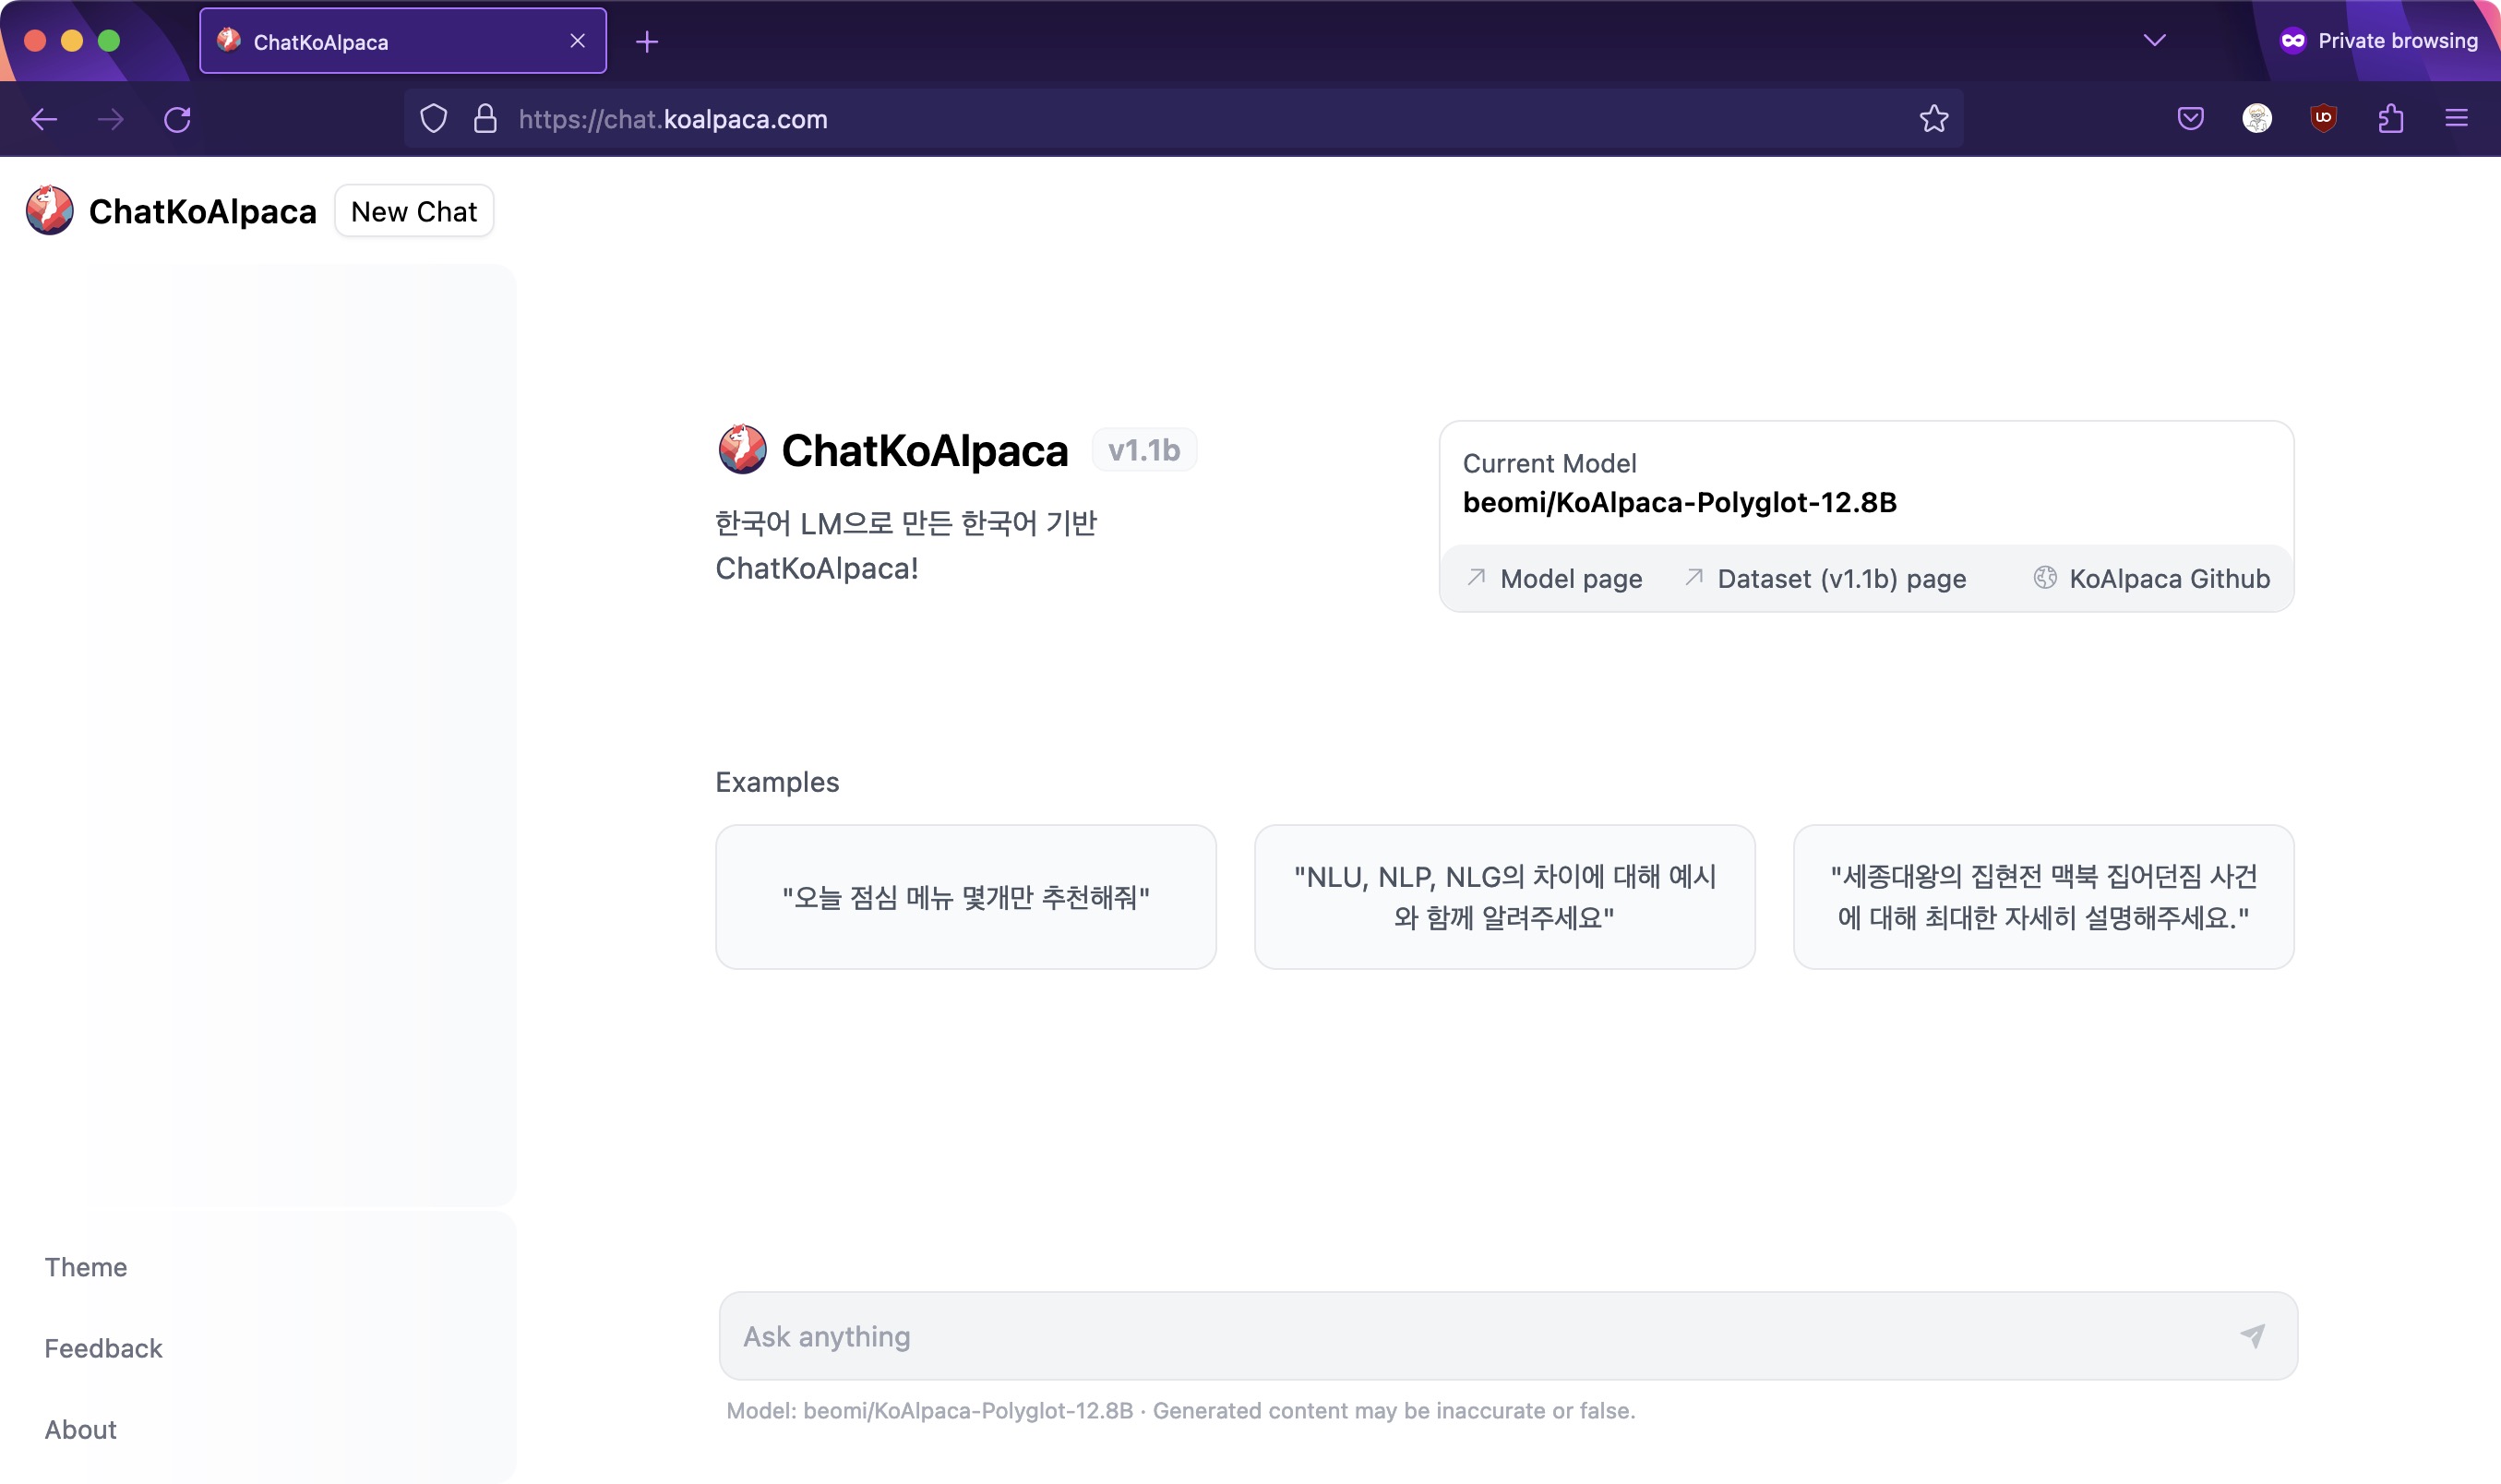 ChatKoAlpaca Web page with chat input